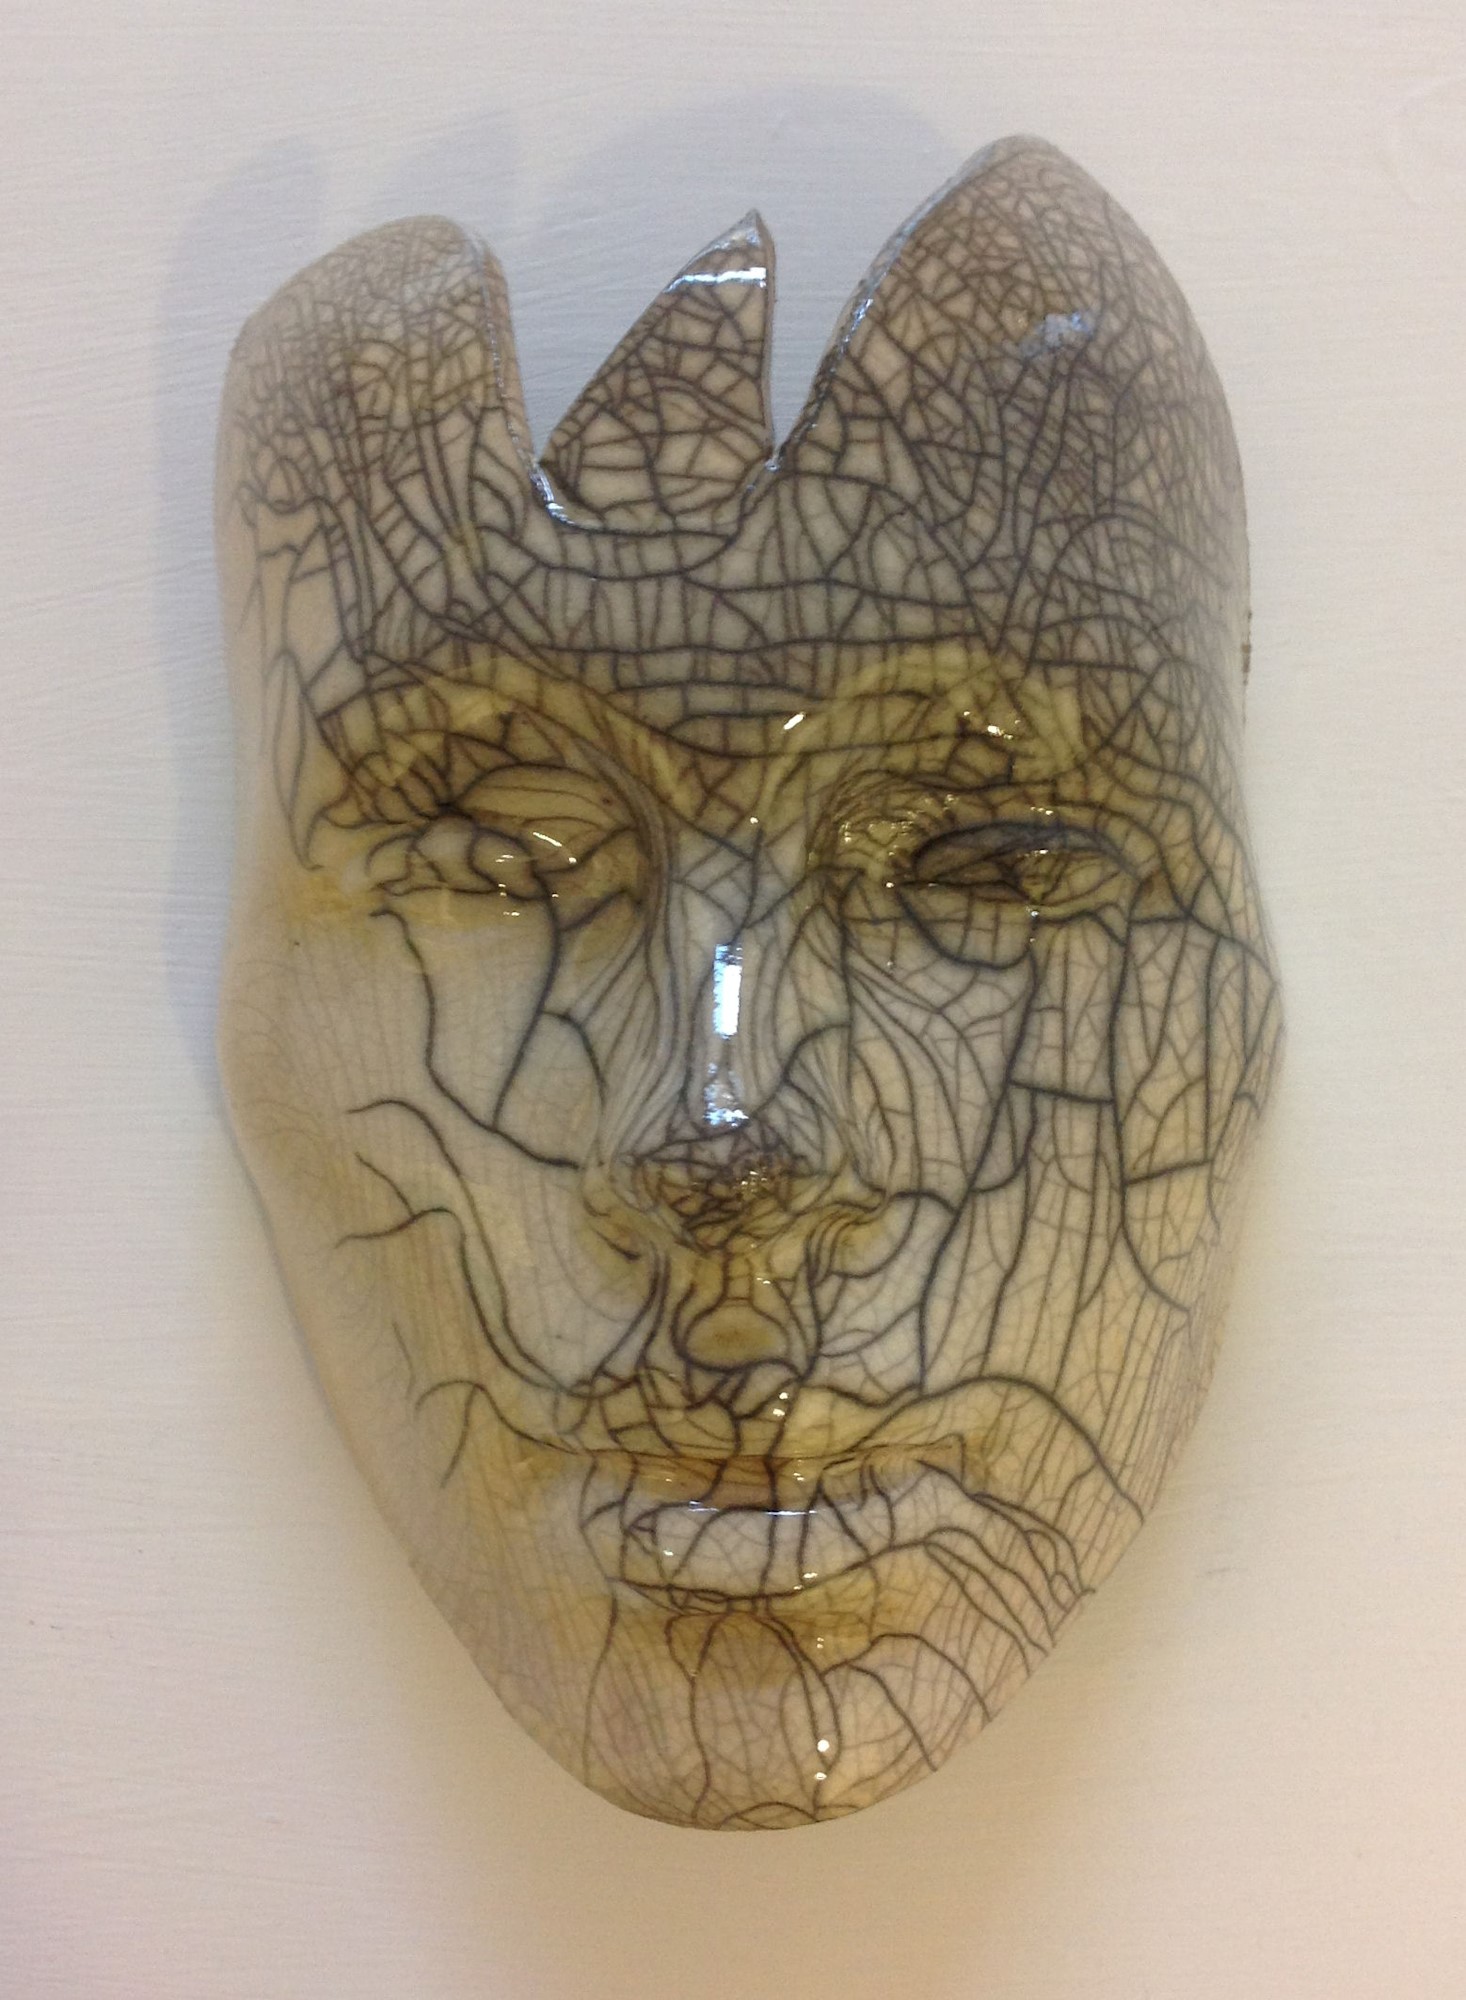 'Mask I' by artist Julian Smith